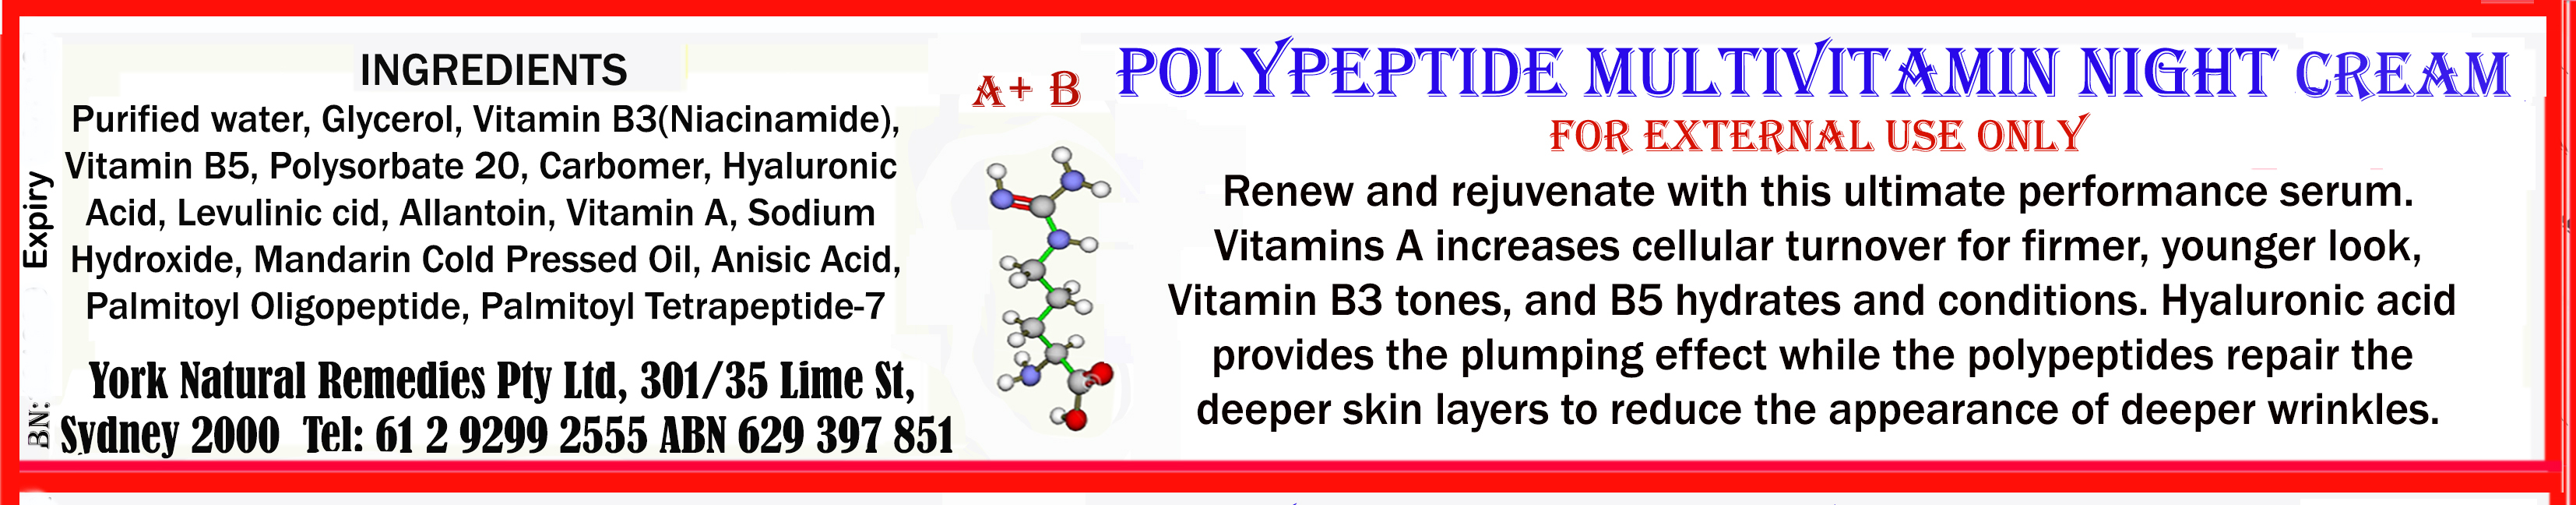 Polypeptide_Multi_NightCream_Single_L